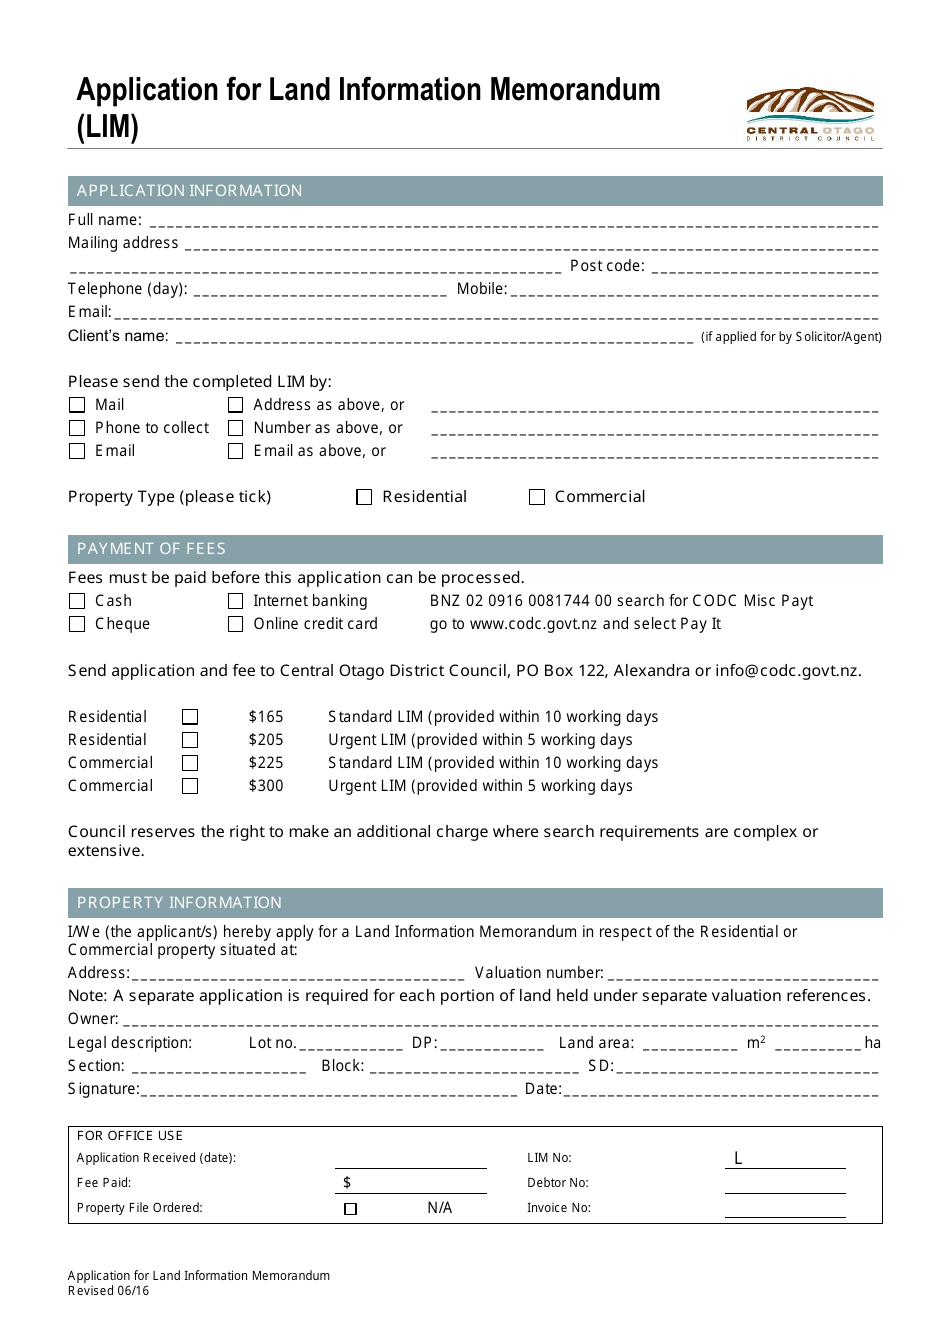 Application for Land Information Memorandum (Lim) - Otago, New Zealand, Page 1